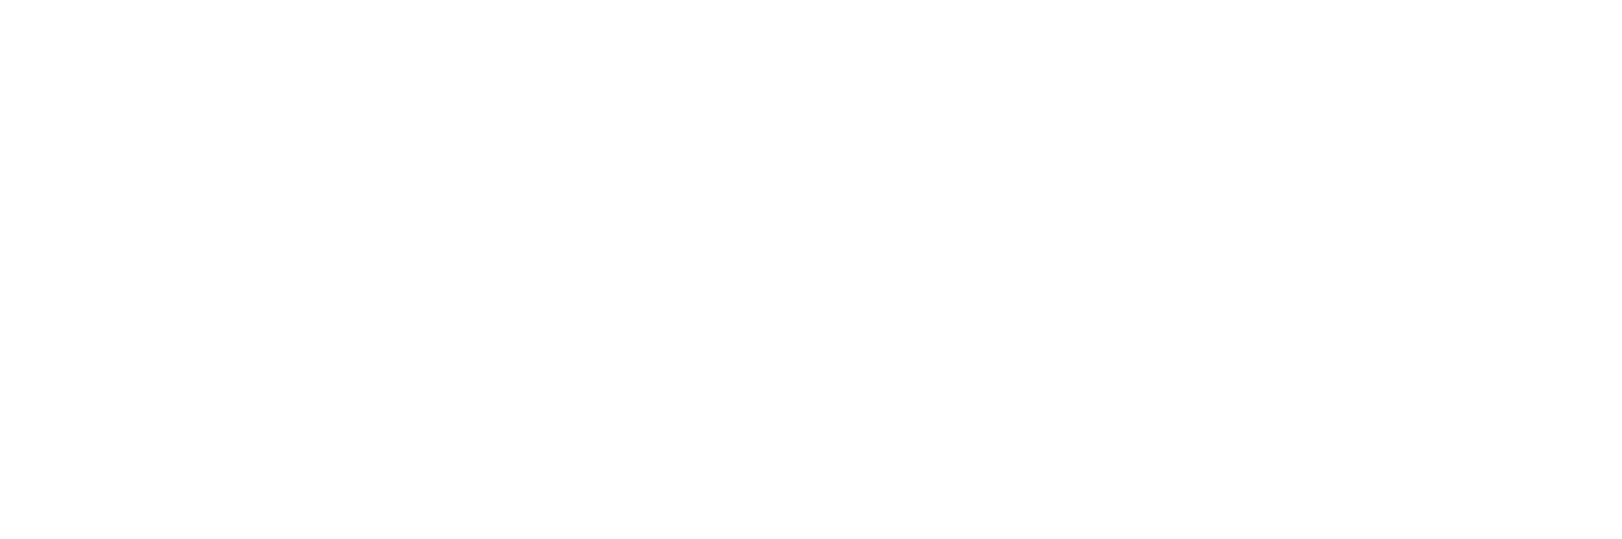 HellBilly